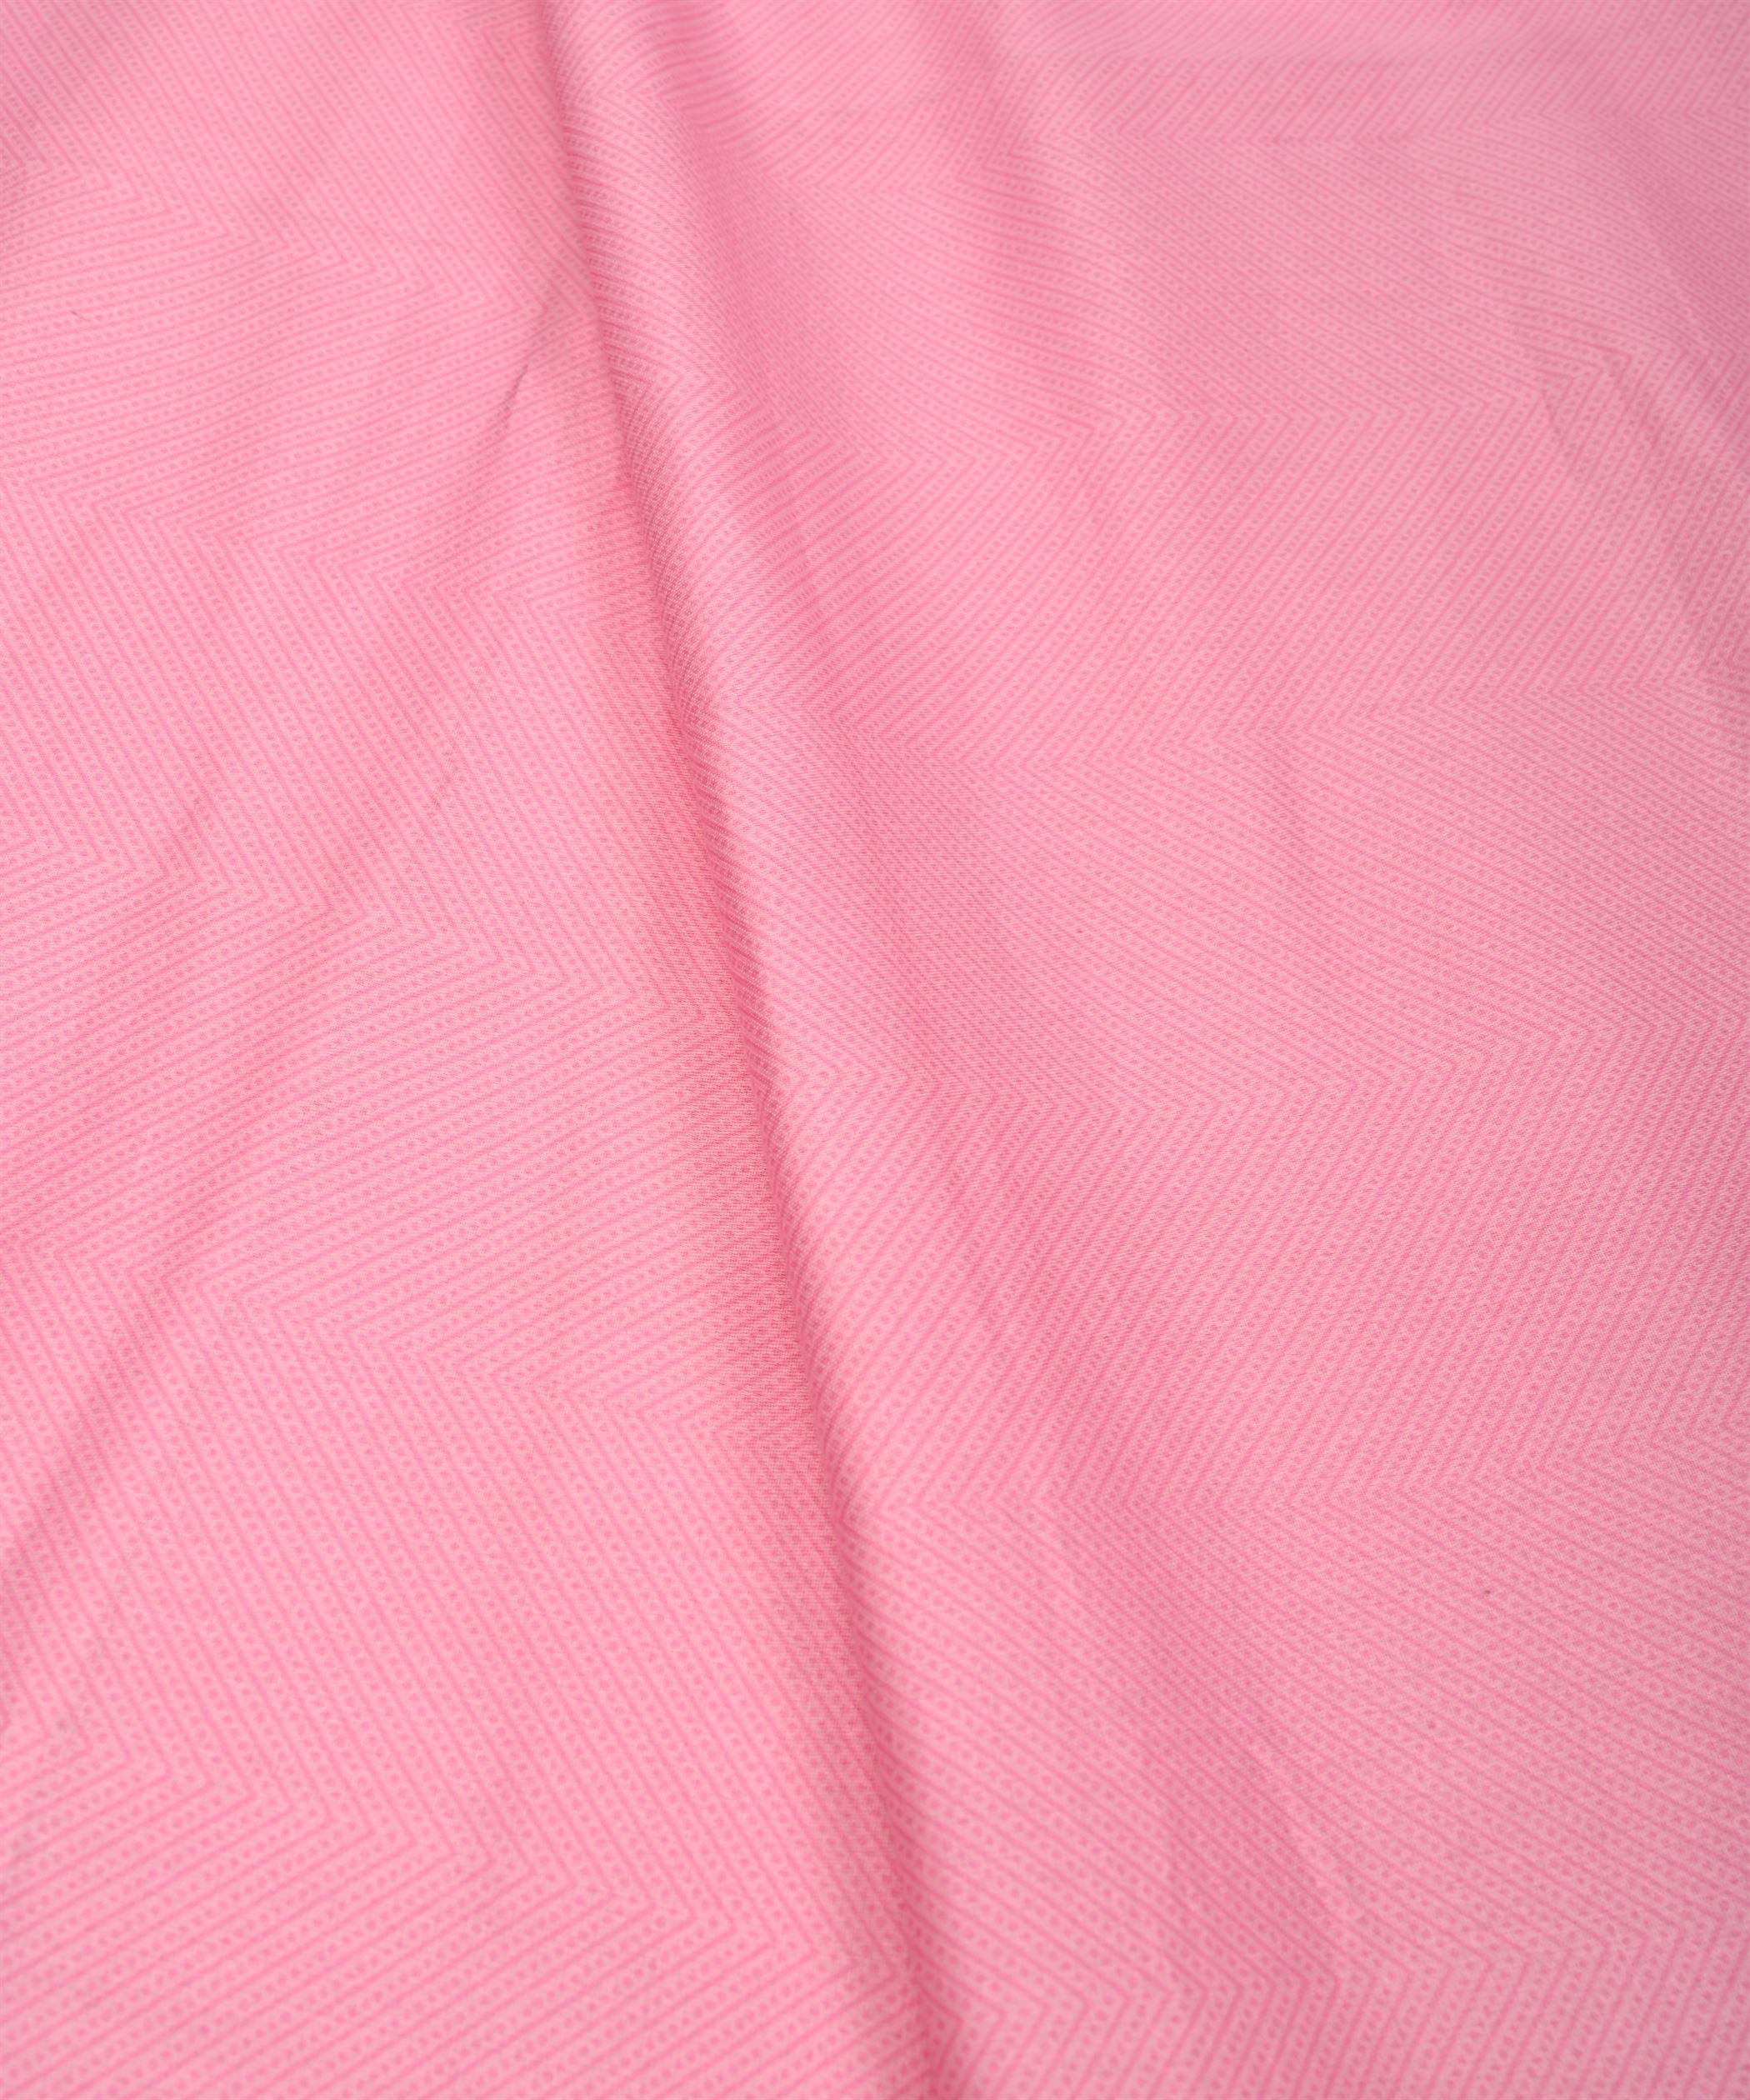 Pink Printed Cotton Satin fabric-3